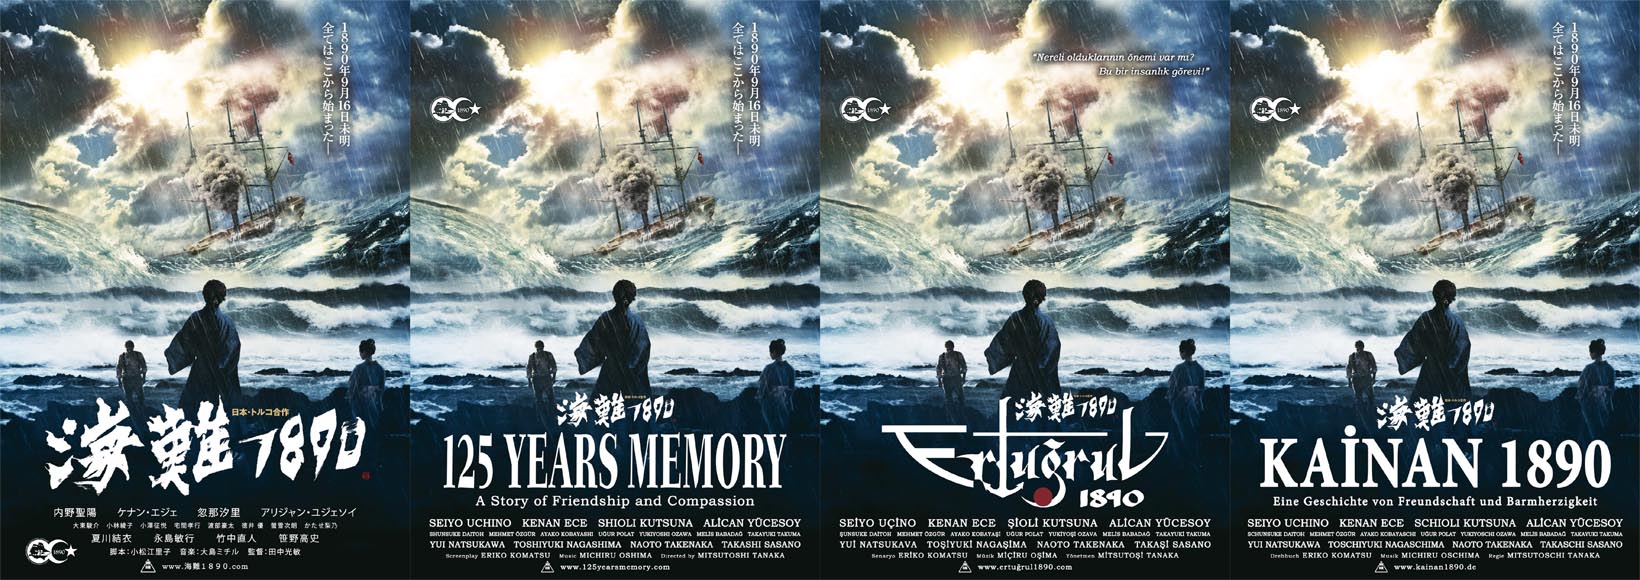 125 Years Memory movie posters